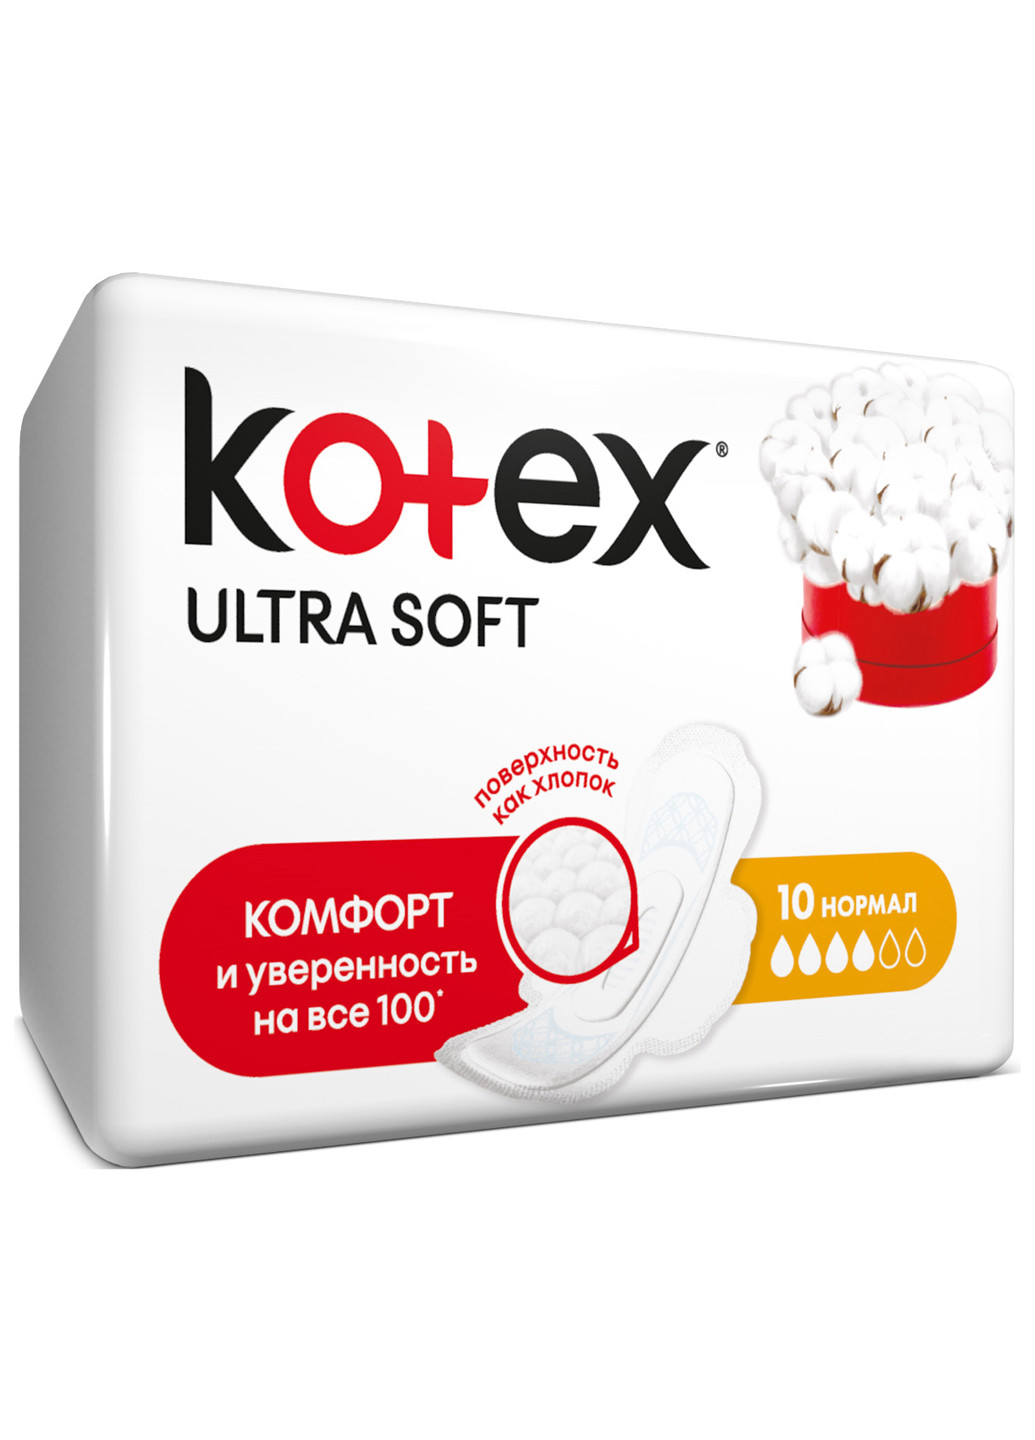 Прокладки коtex ultra soft normal (10 шт) Kotex 5029053542669 (255953499)